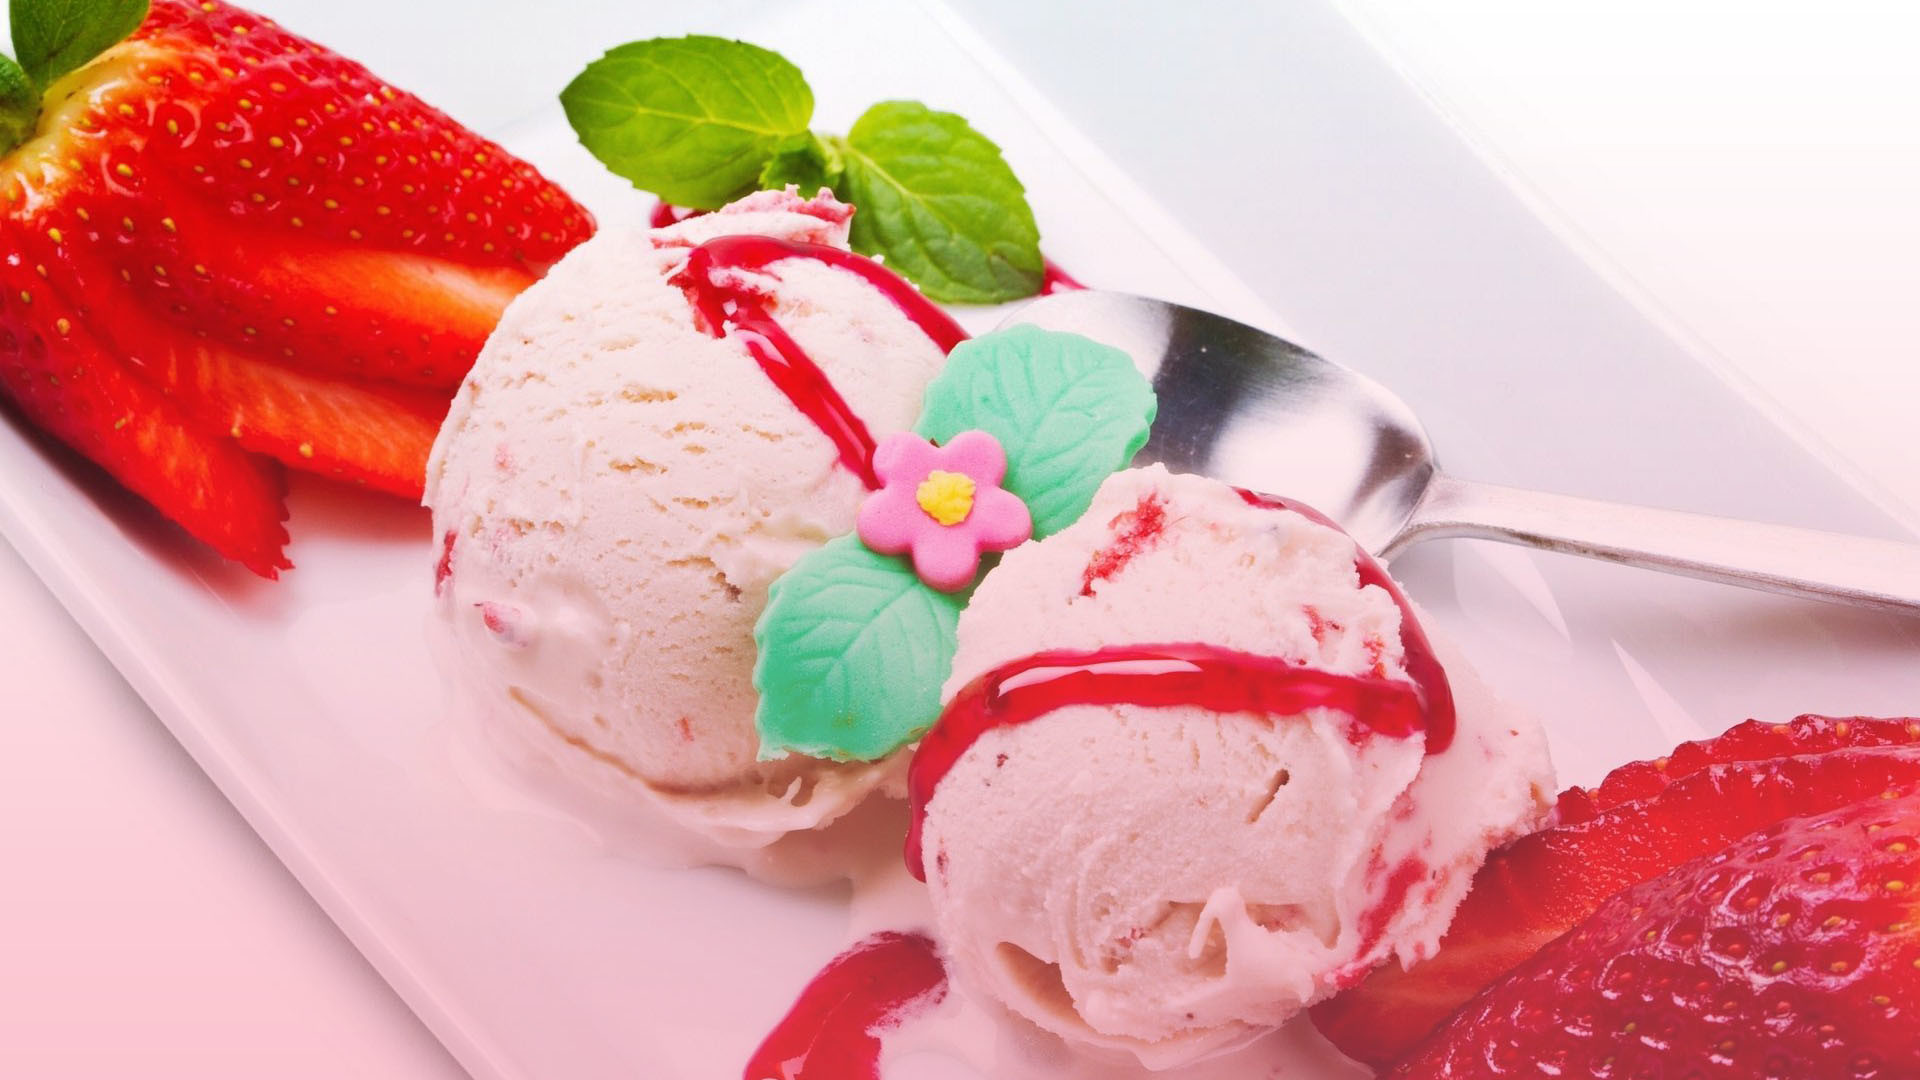 Good night strawberry flavor ice cream image wallpaper free.